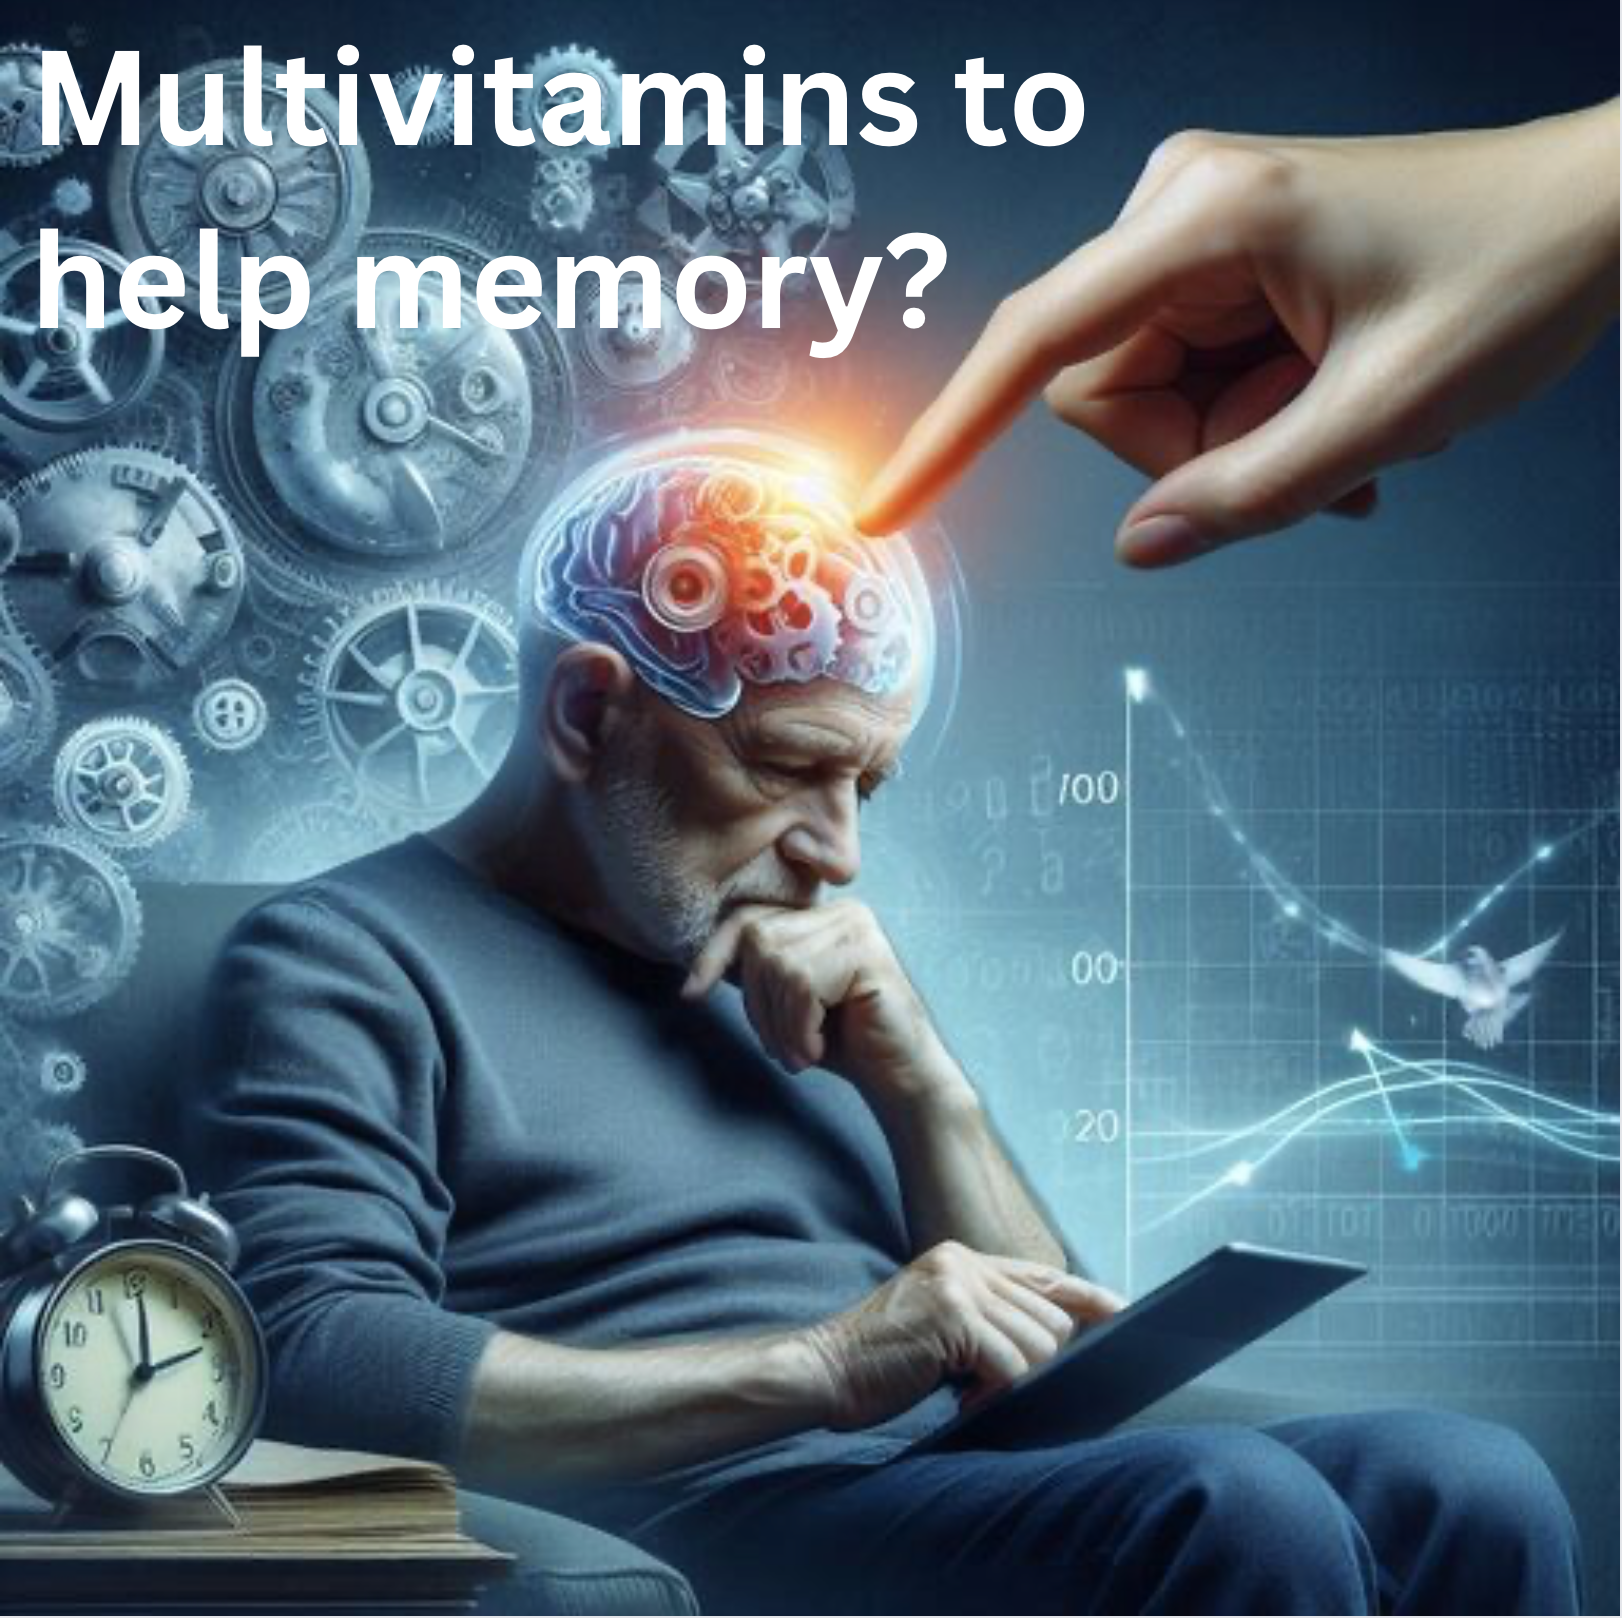 Multivitamins to Help Memory?